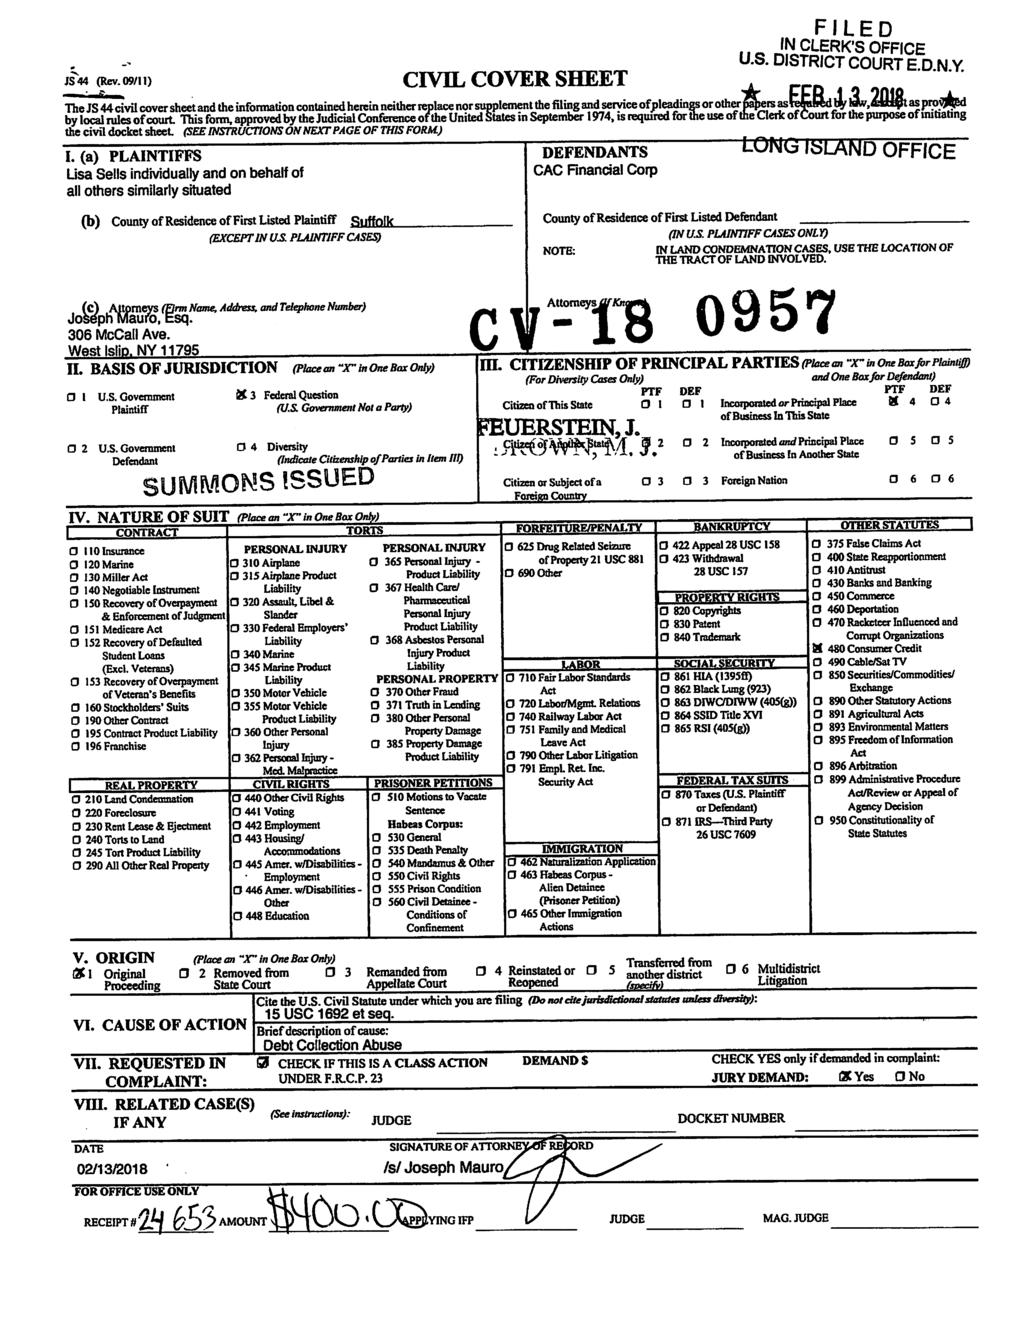 Case 2:18-cv-00957-SJF-GRB Document 1-1